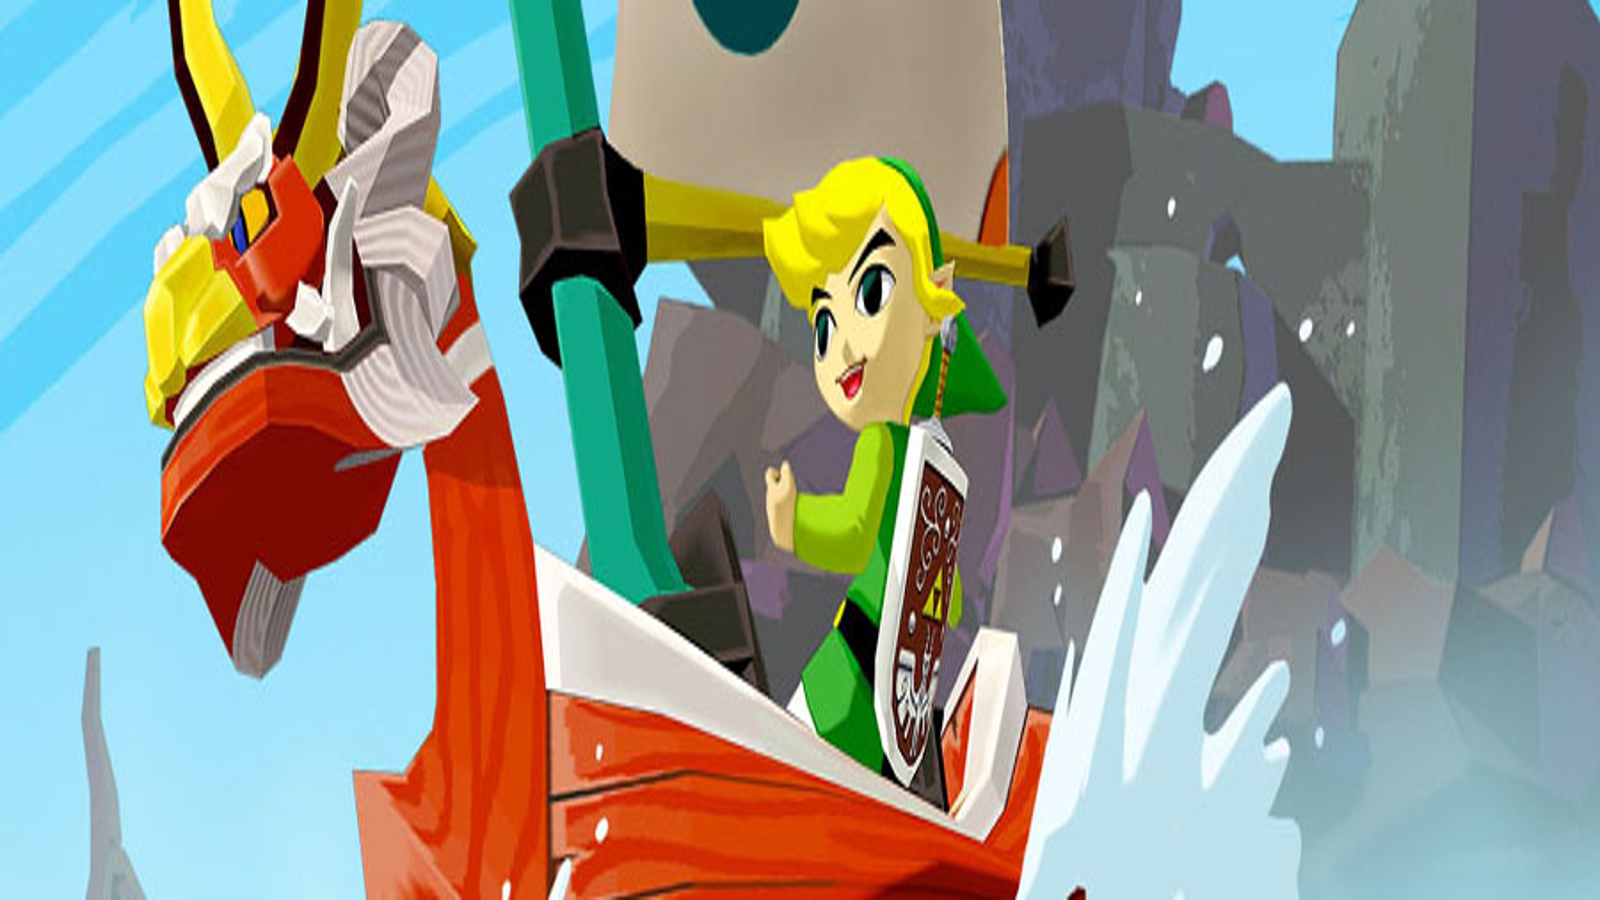 Wii U Developer Direct - The Legend of Zelda: The Wind Waker HD